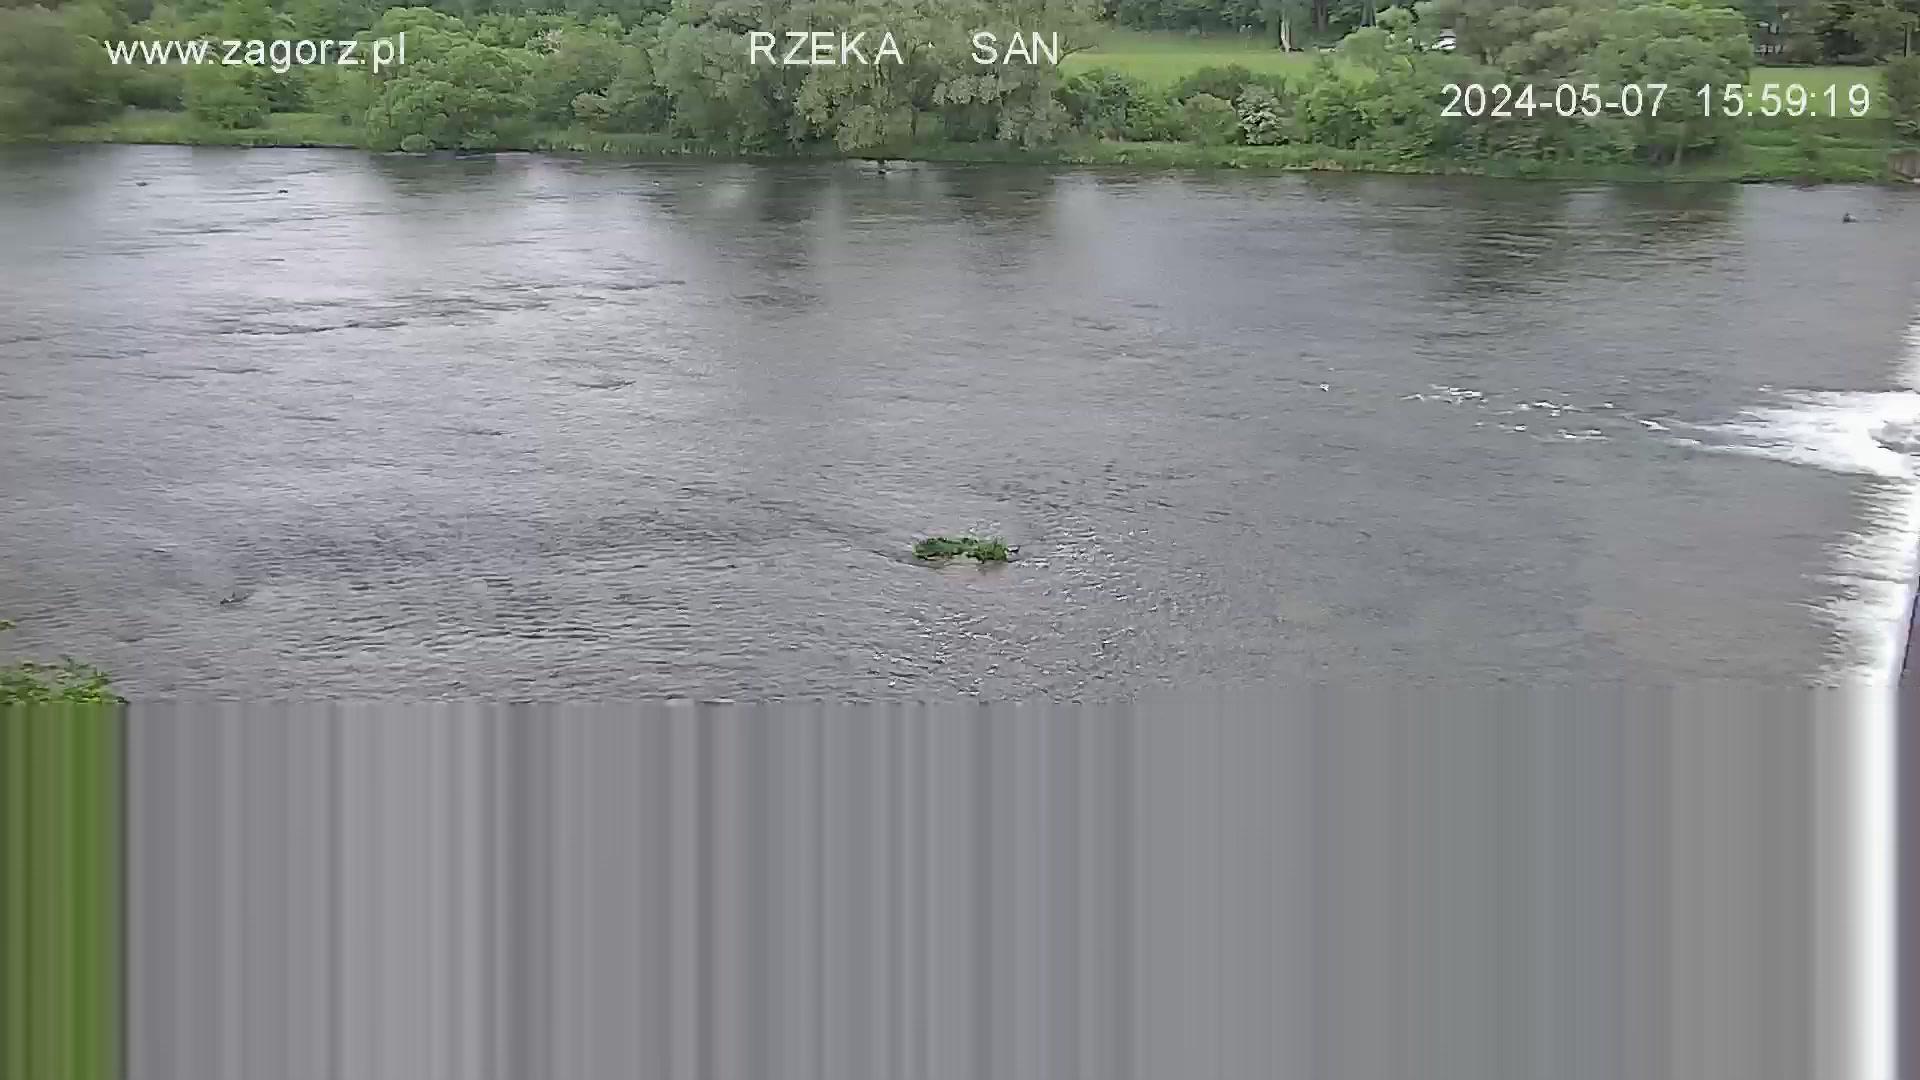 Zagorz › East: San river